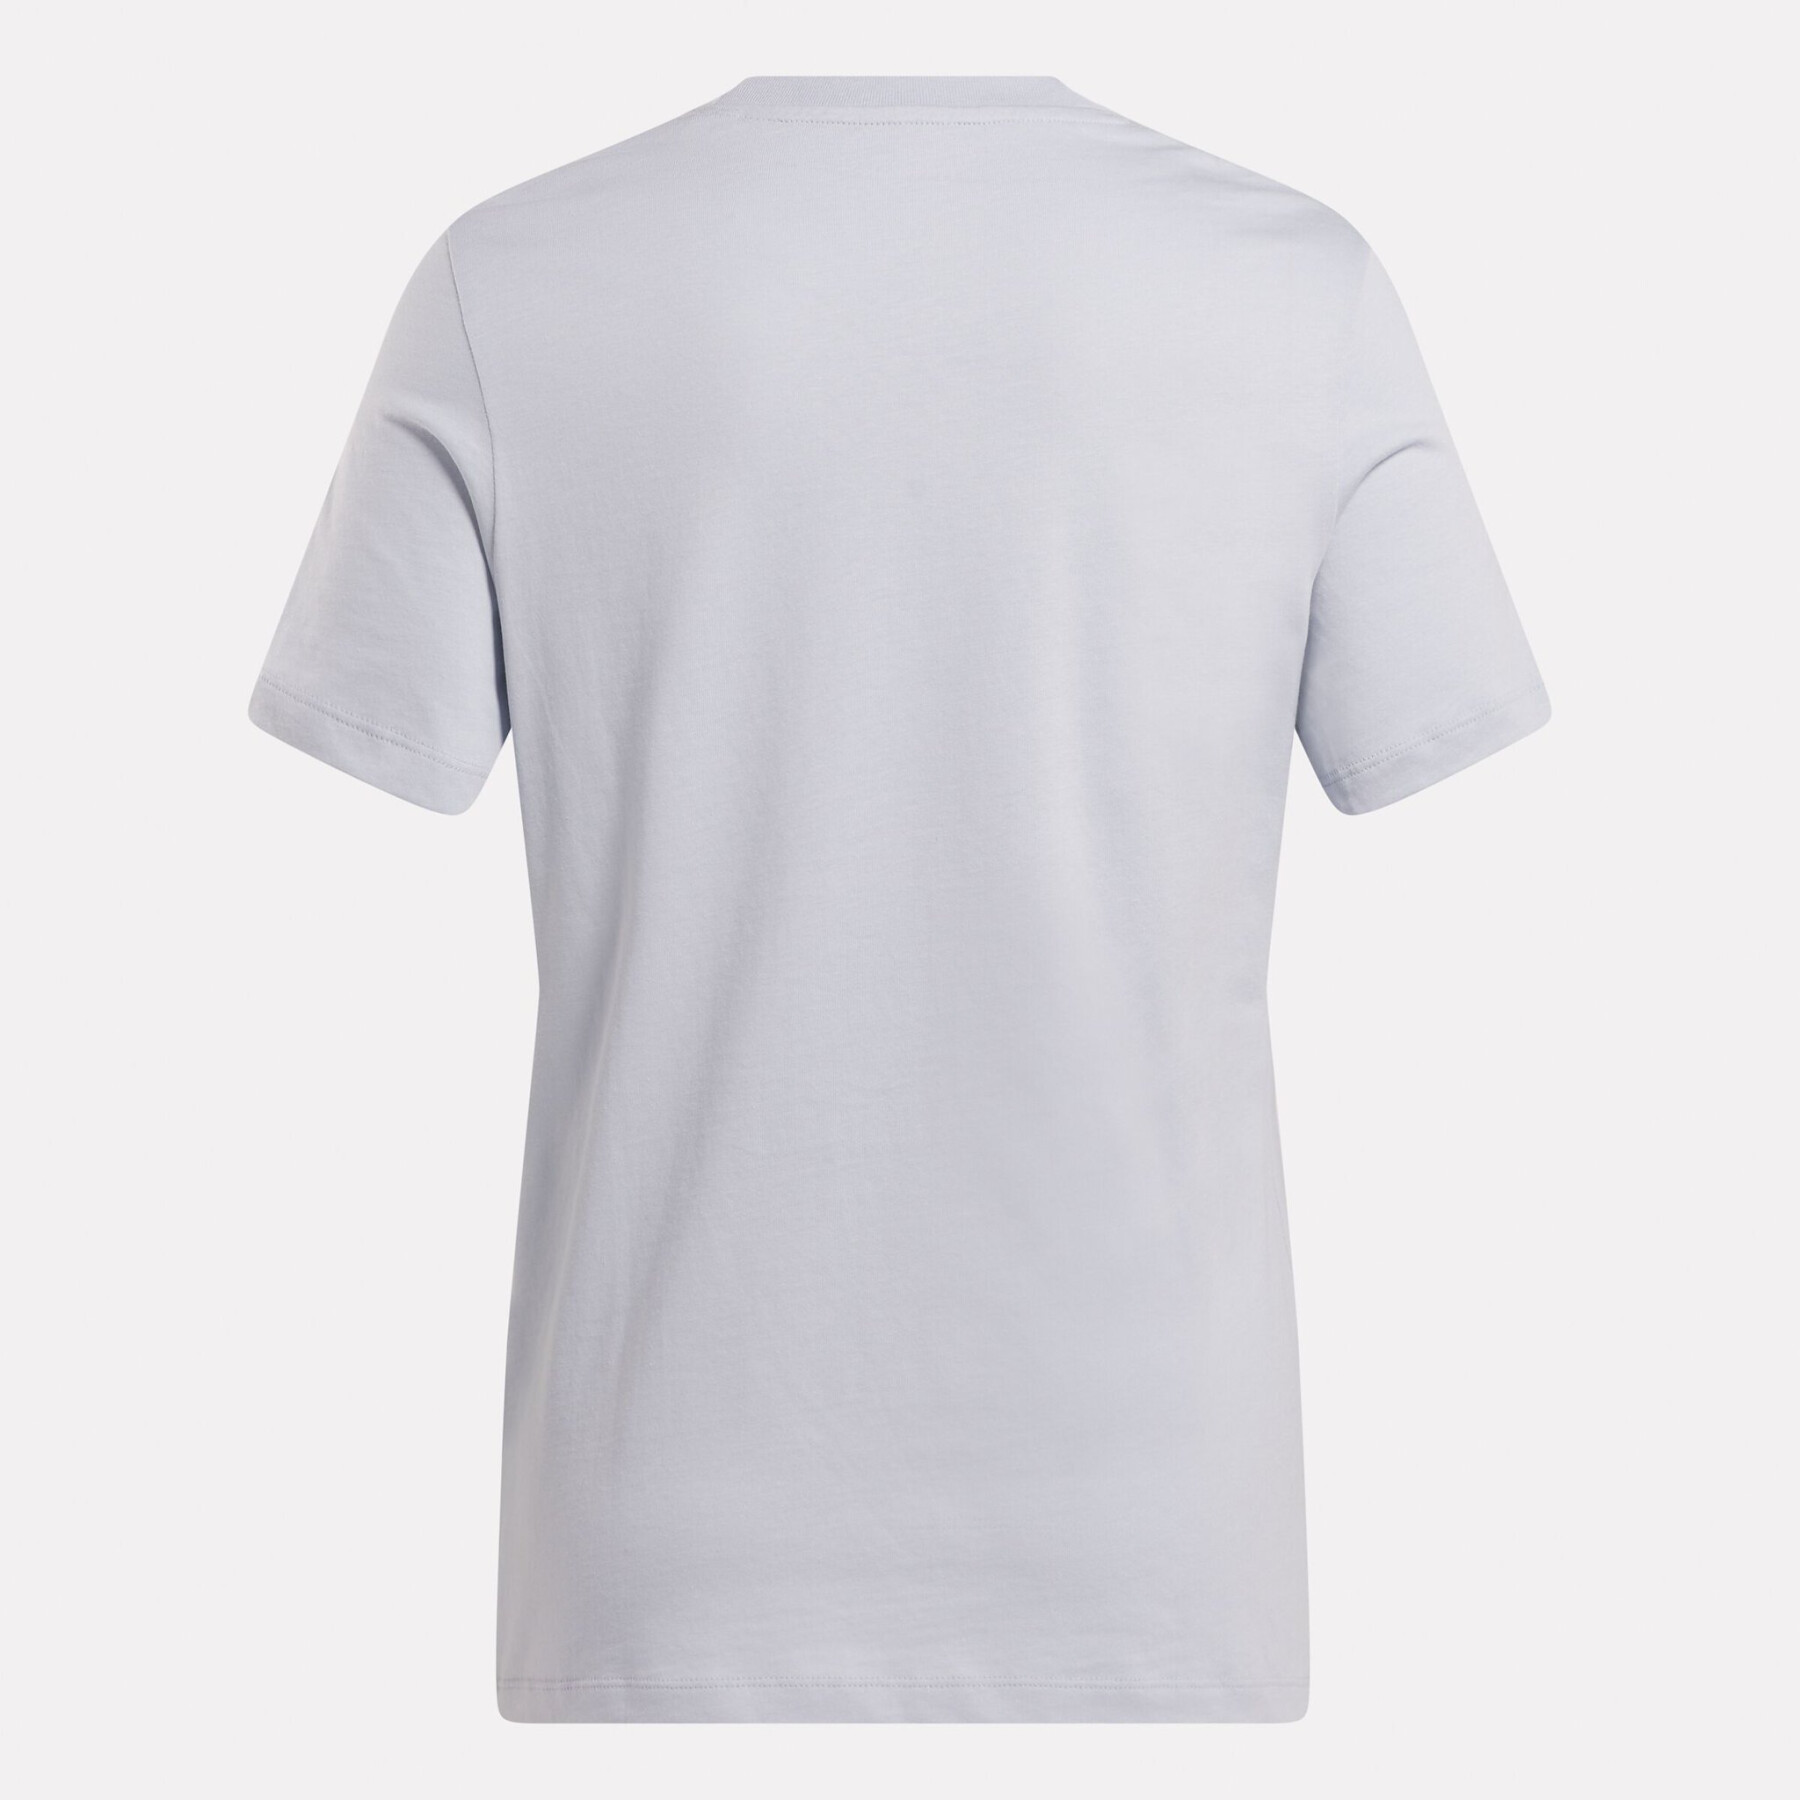 Dames-T-shirt Reebok Vector Graphic